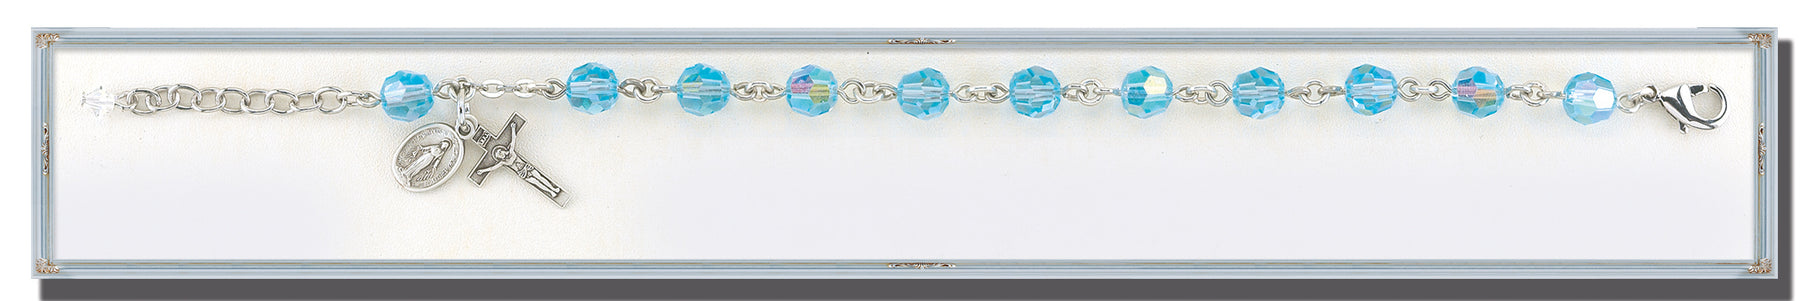 Alexandrite Round Faceted Swarovski Crystal Bead Bracelet